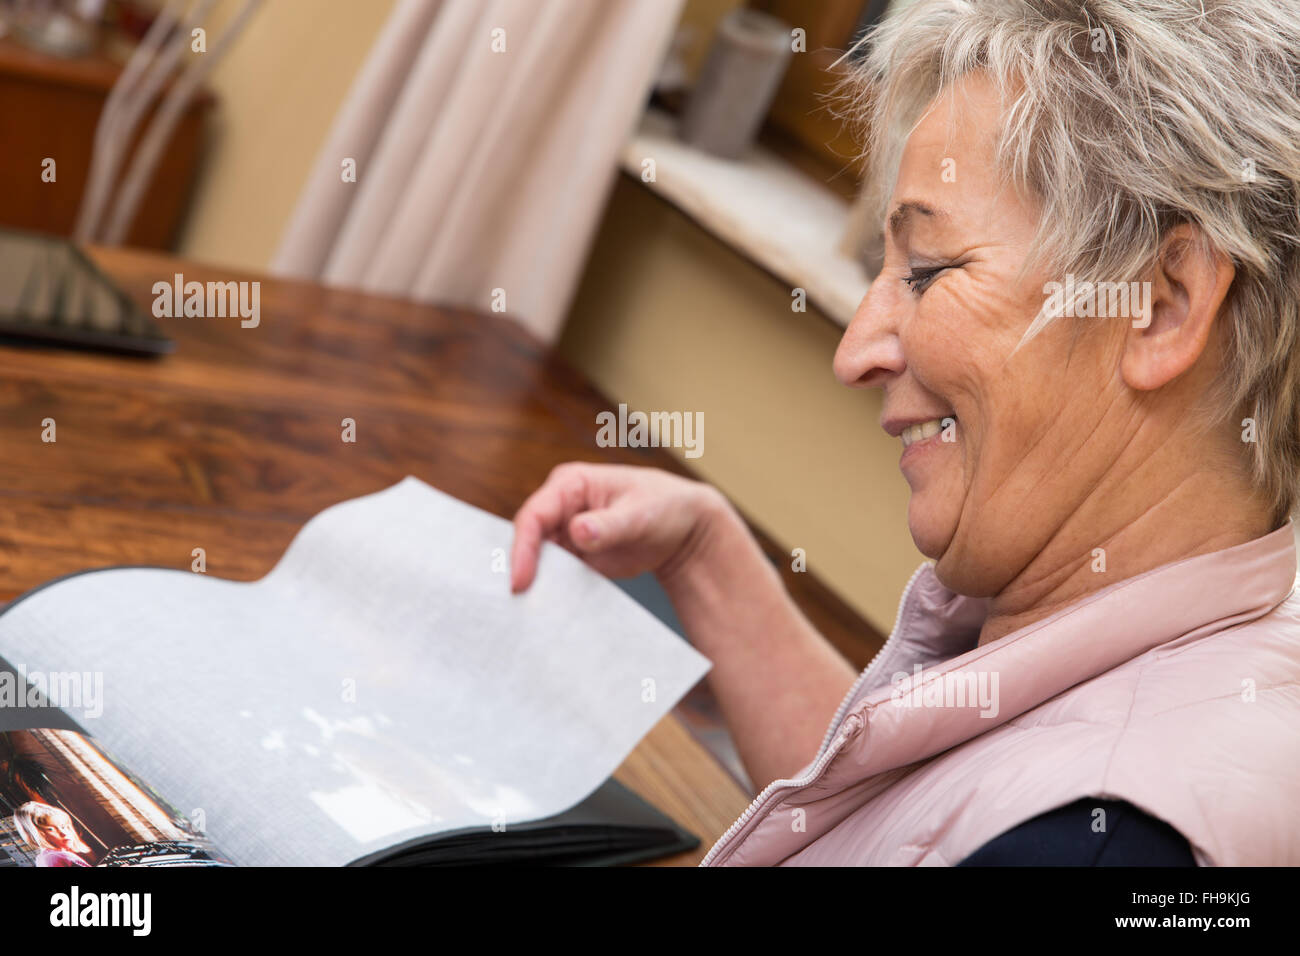 senior adult woman is looking into photo album Stock Photo